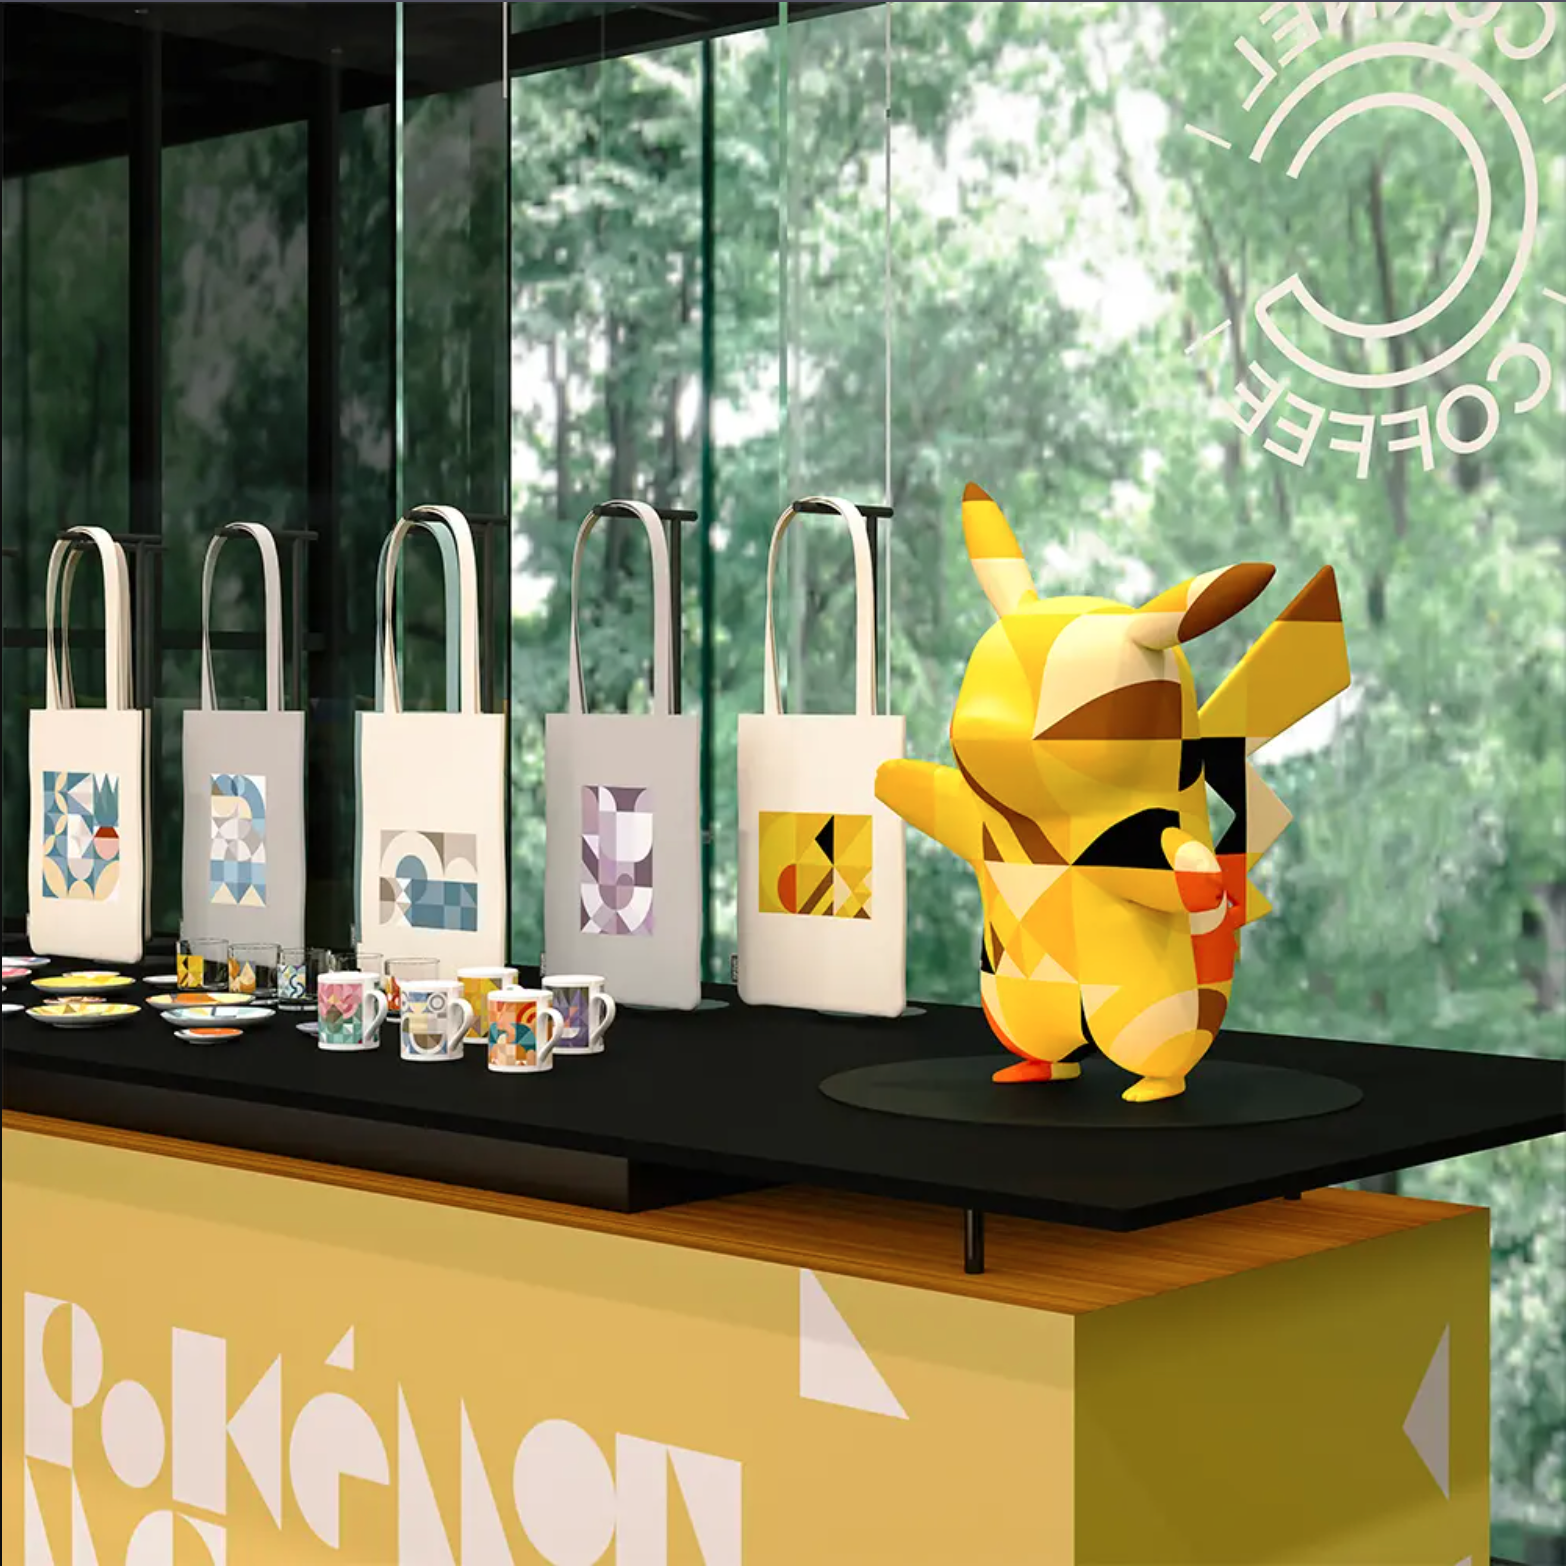 Display photo of Pokémon x Nendo collaboration products